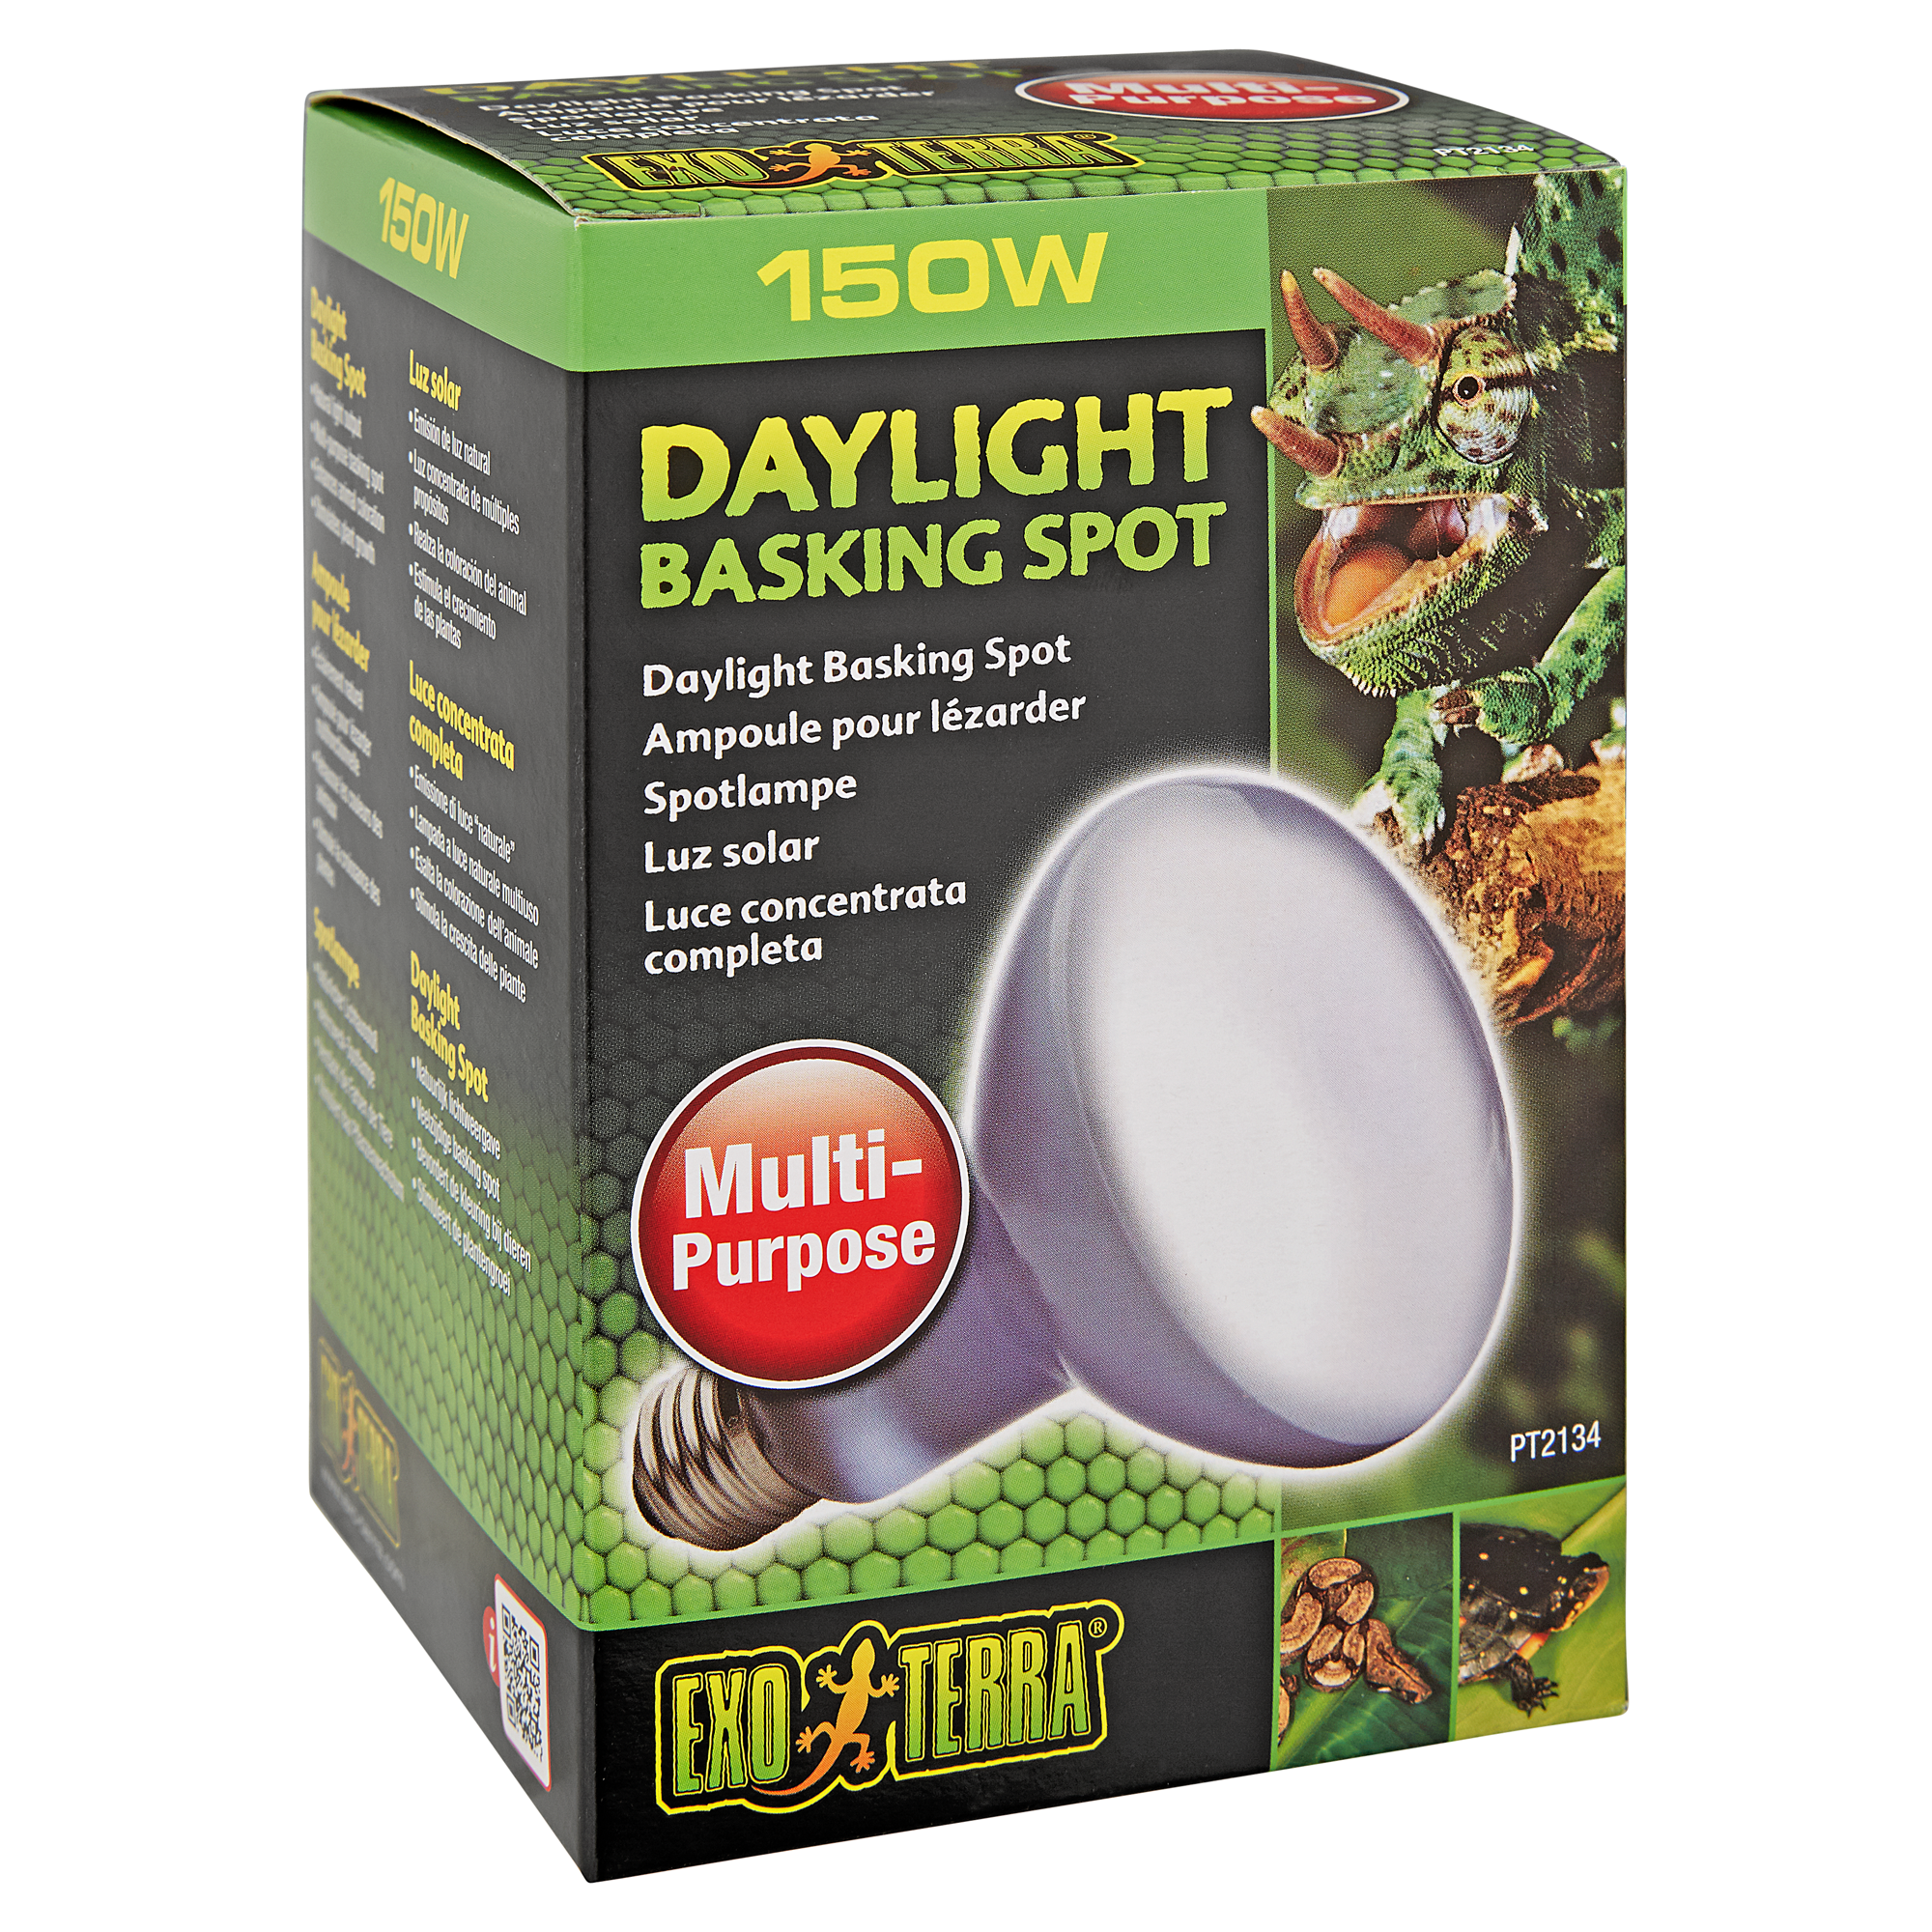 Tageslichtwärmelampe "Daylight Basking Spot" 150 W + product picture